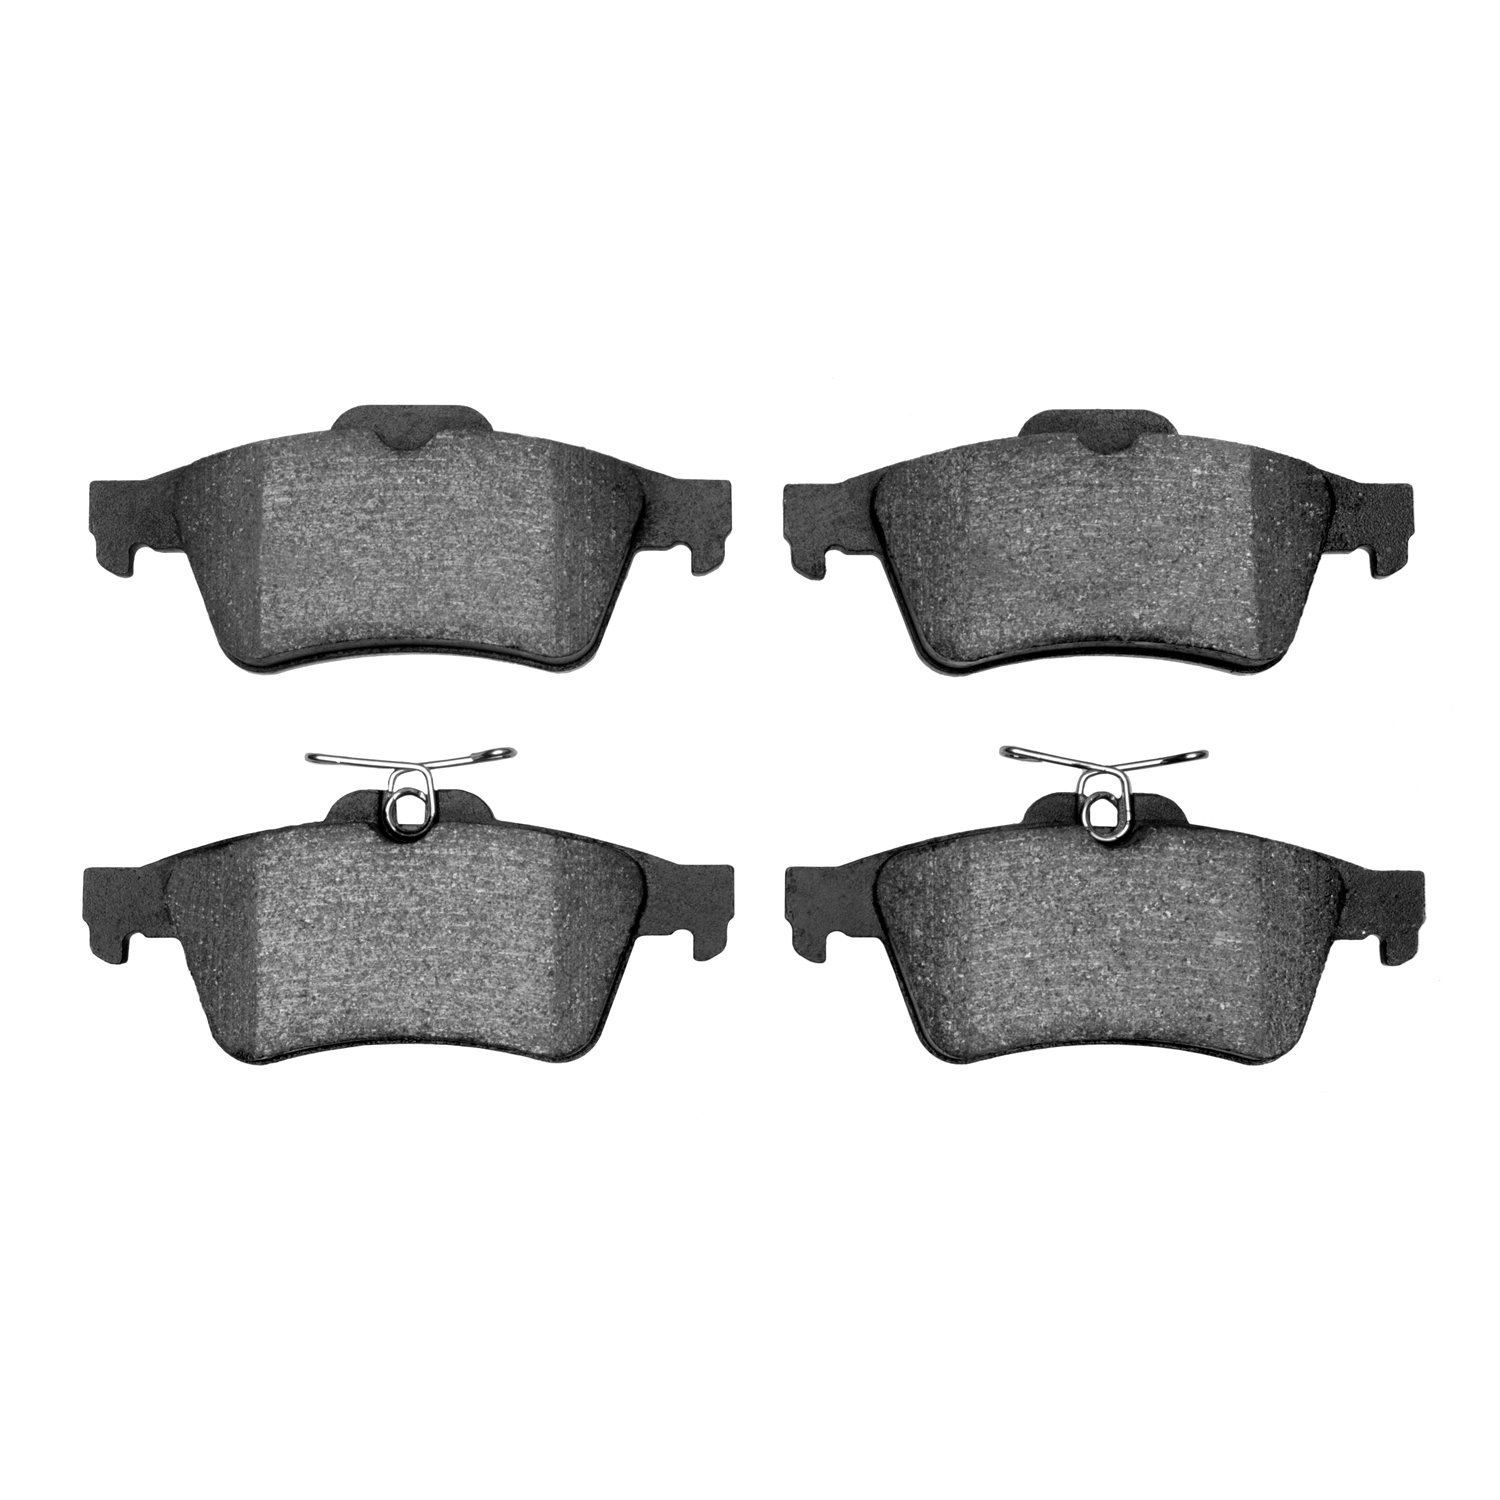 1551-1095-00 5000 Advanced Ceramic Brake Pads, Fits Select Multiple Makes/Models, Position: Rear